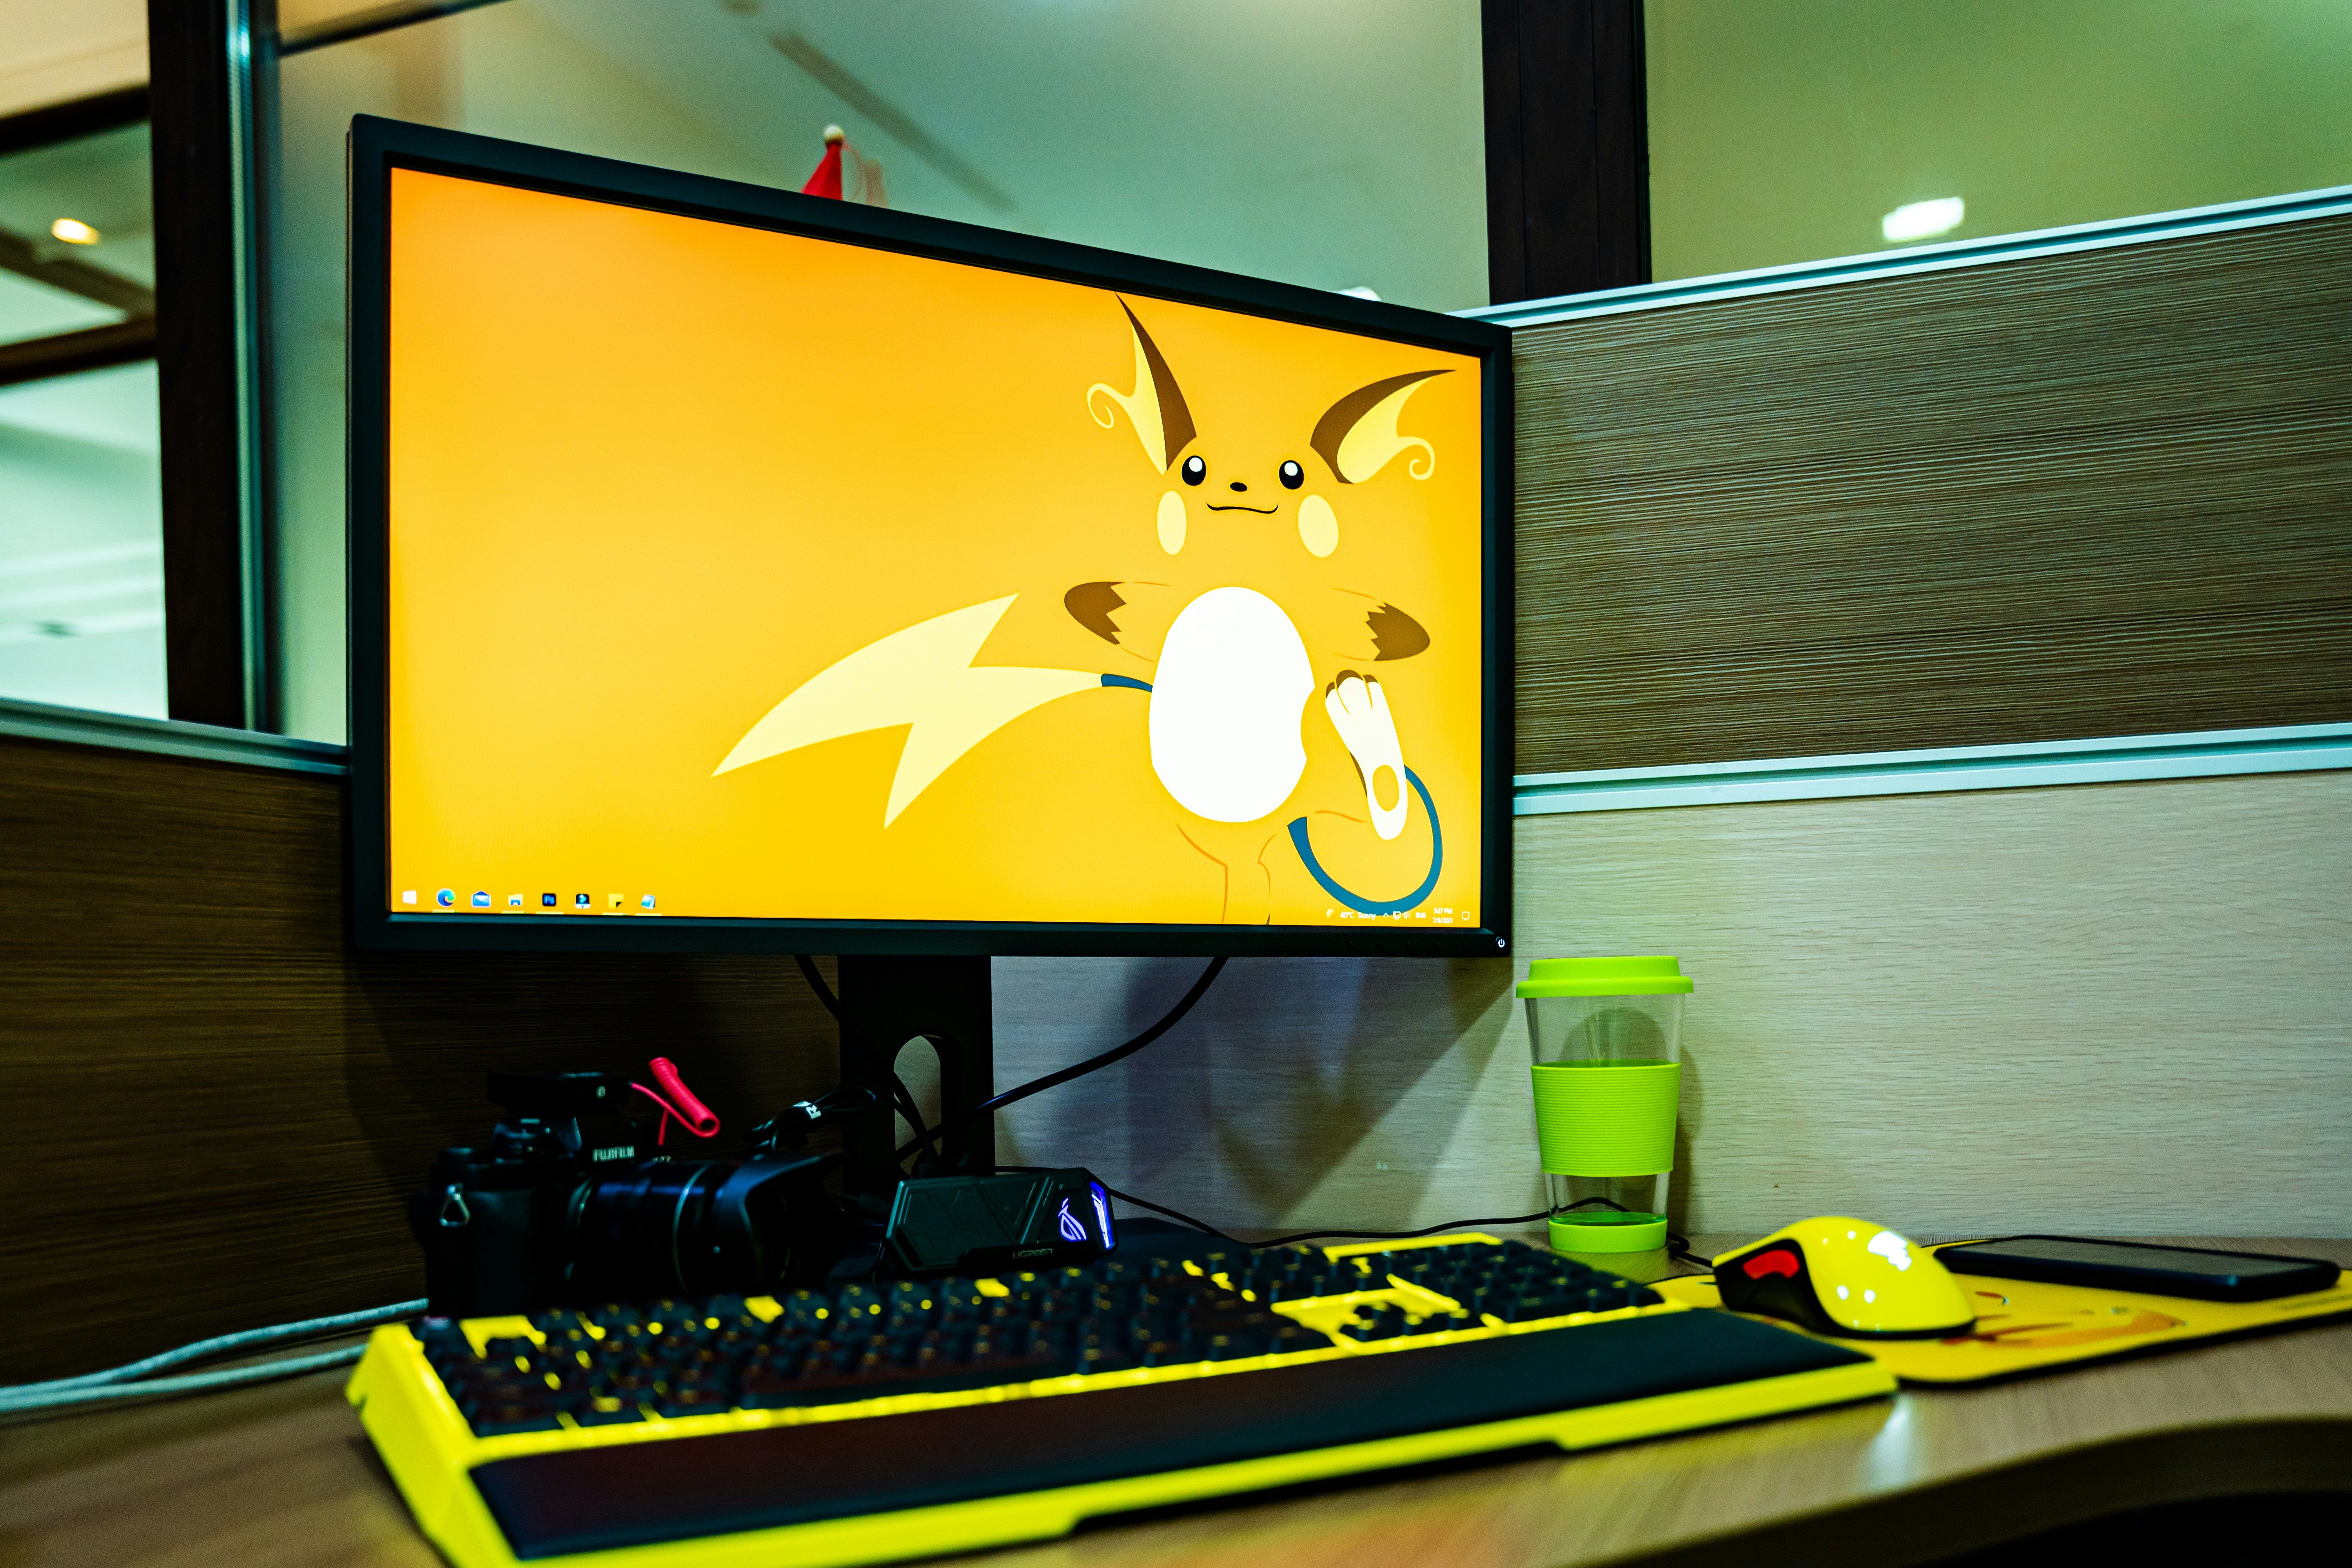 A desktop with a Pokémon-themed wallpaper